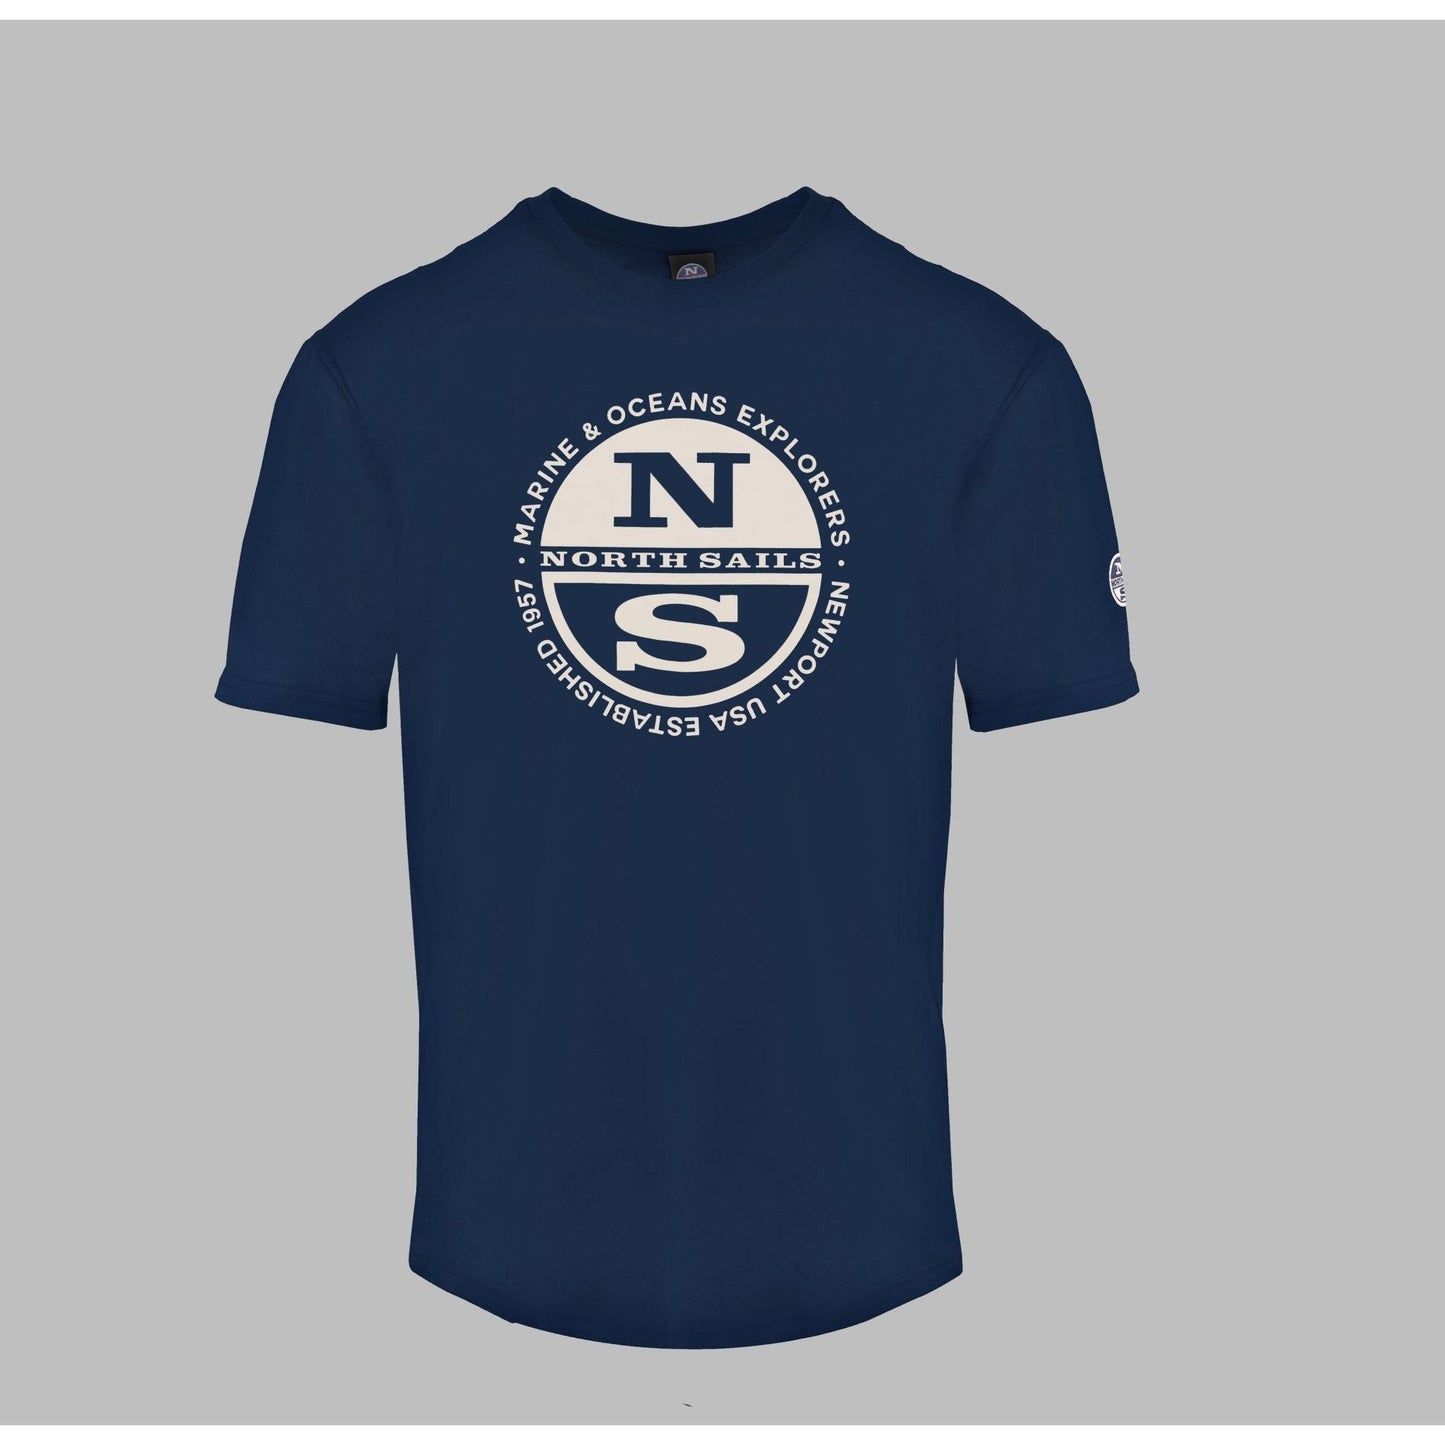 North Sails Men's T-Shirt,Medium,Navy - Brandat Outlet